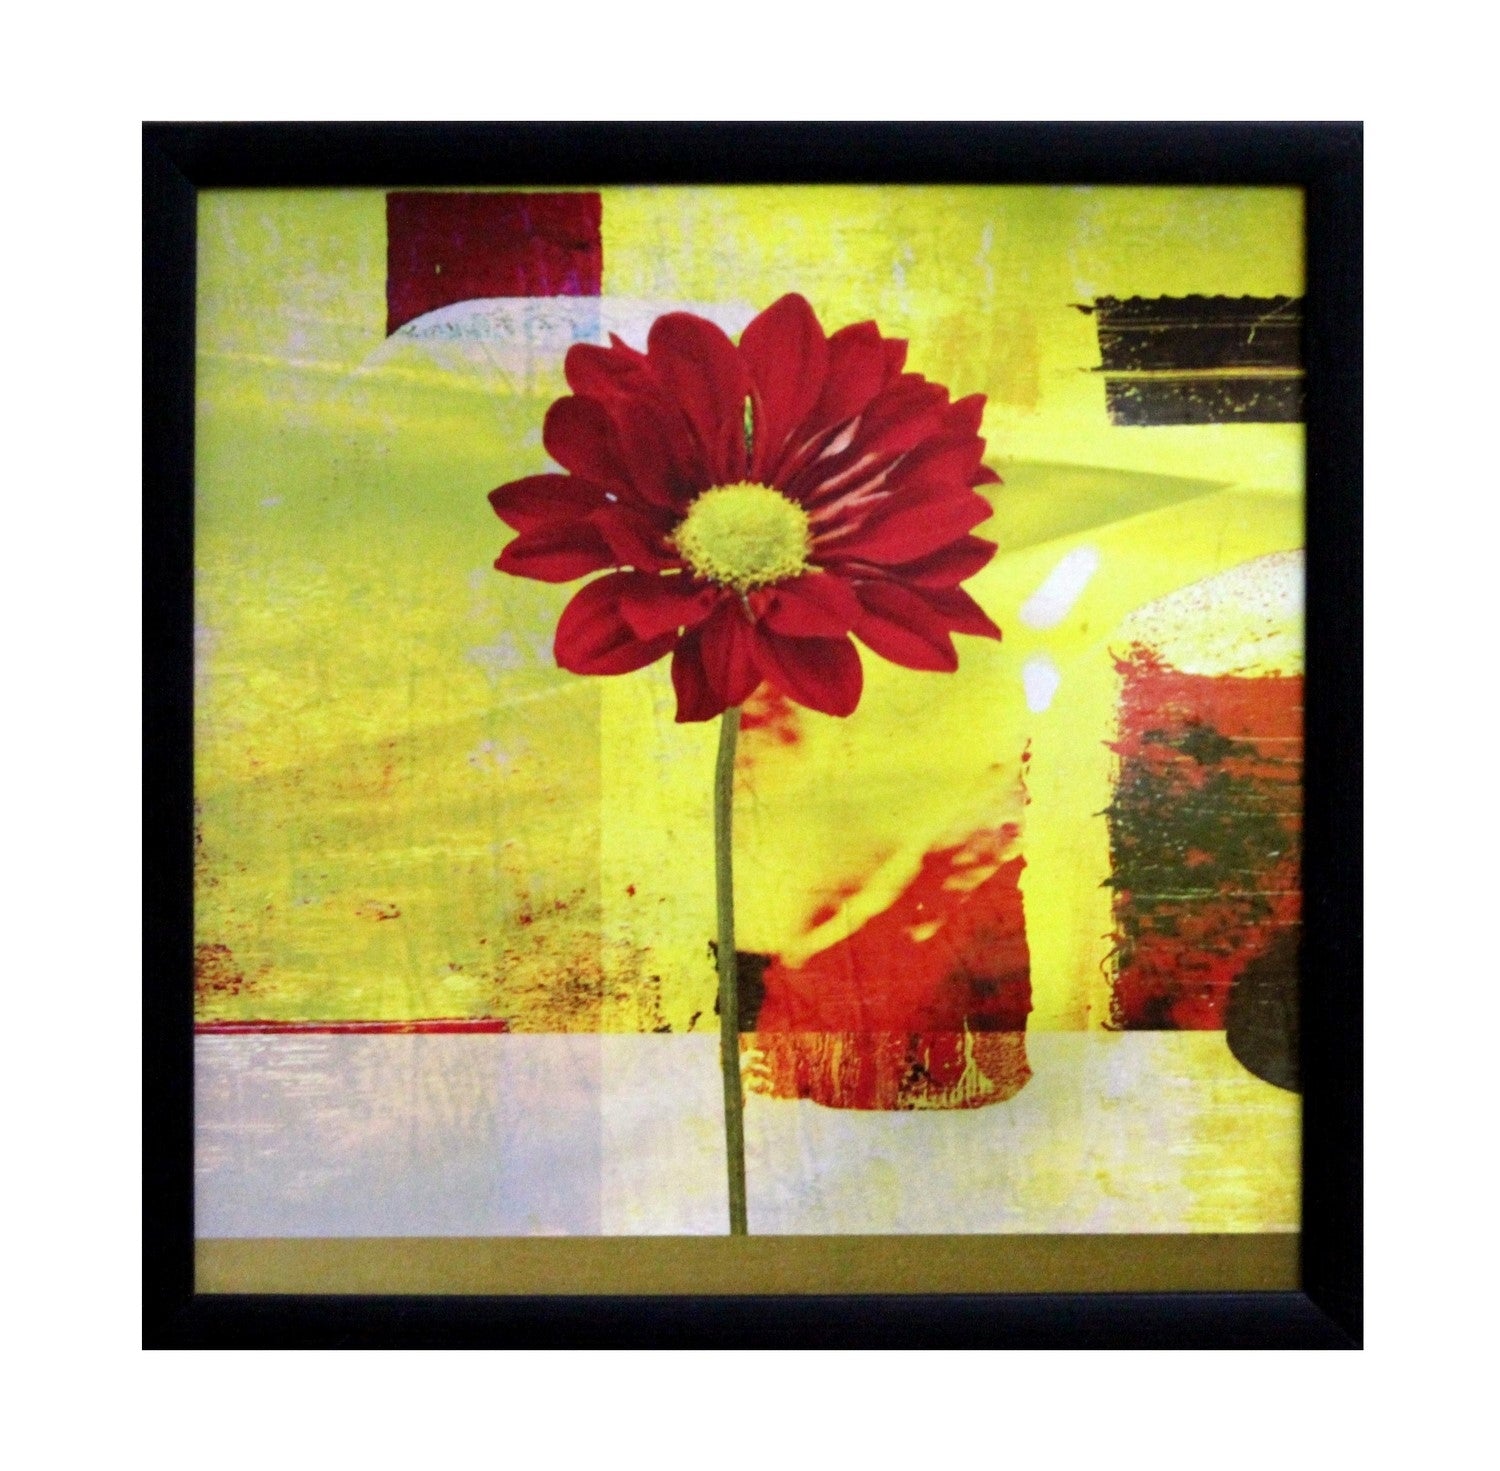 Red Sunflower Design Satin Matt Texture UV Art Painting